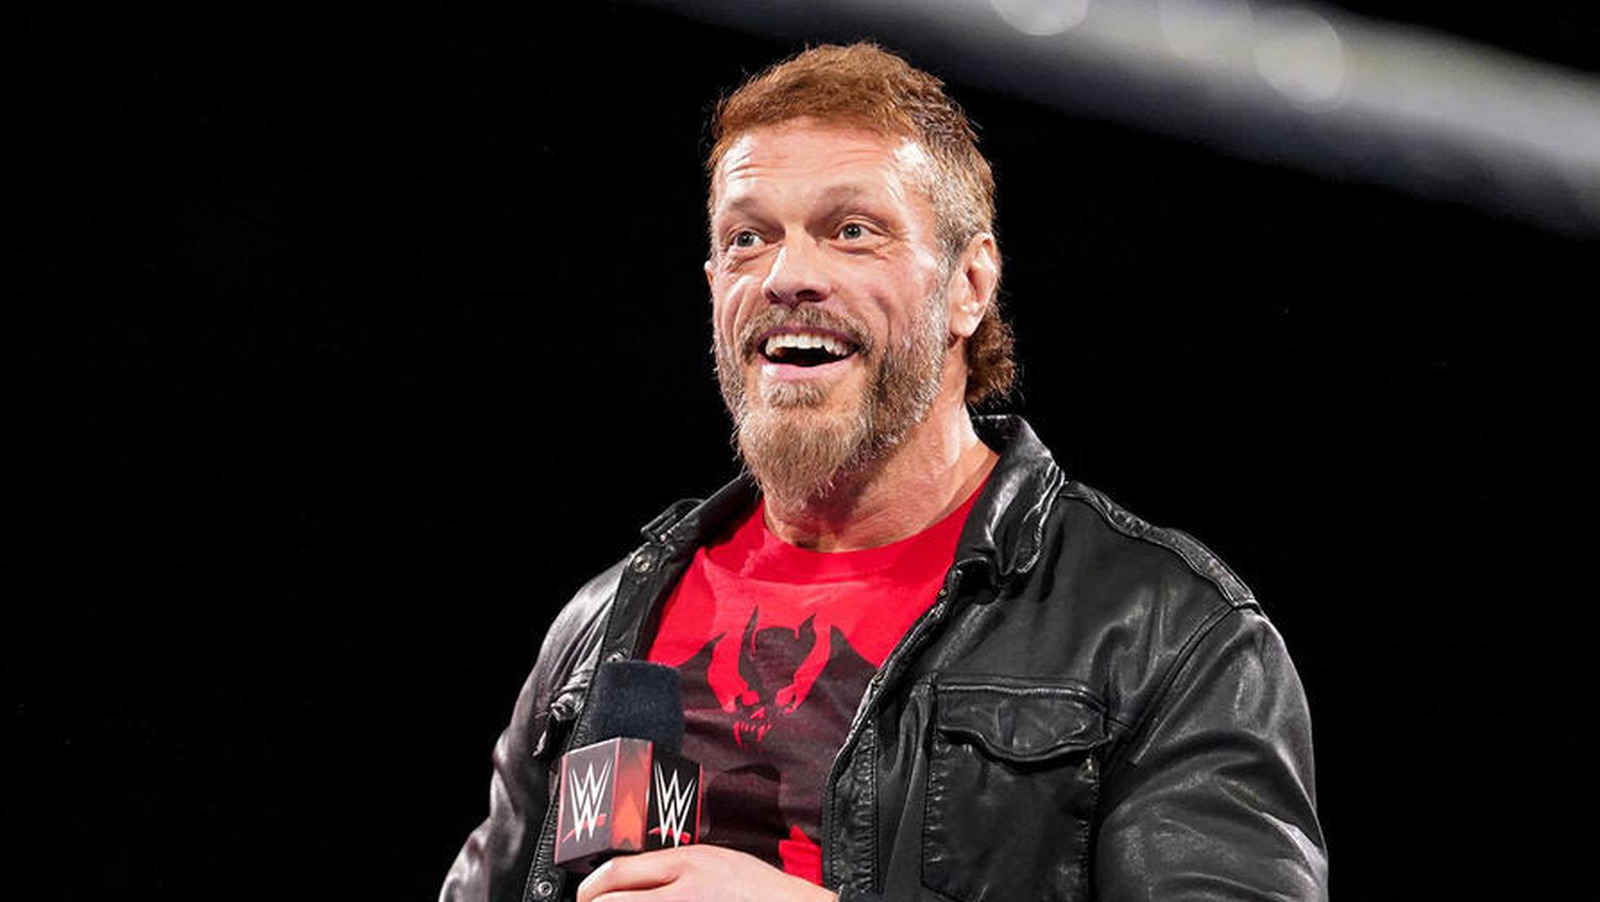 WWE SmackDown Preview 8/18: Edge Vs. Sheamus, More